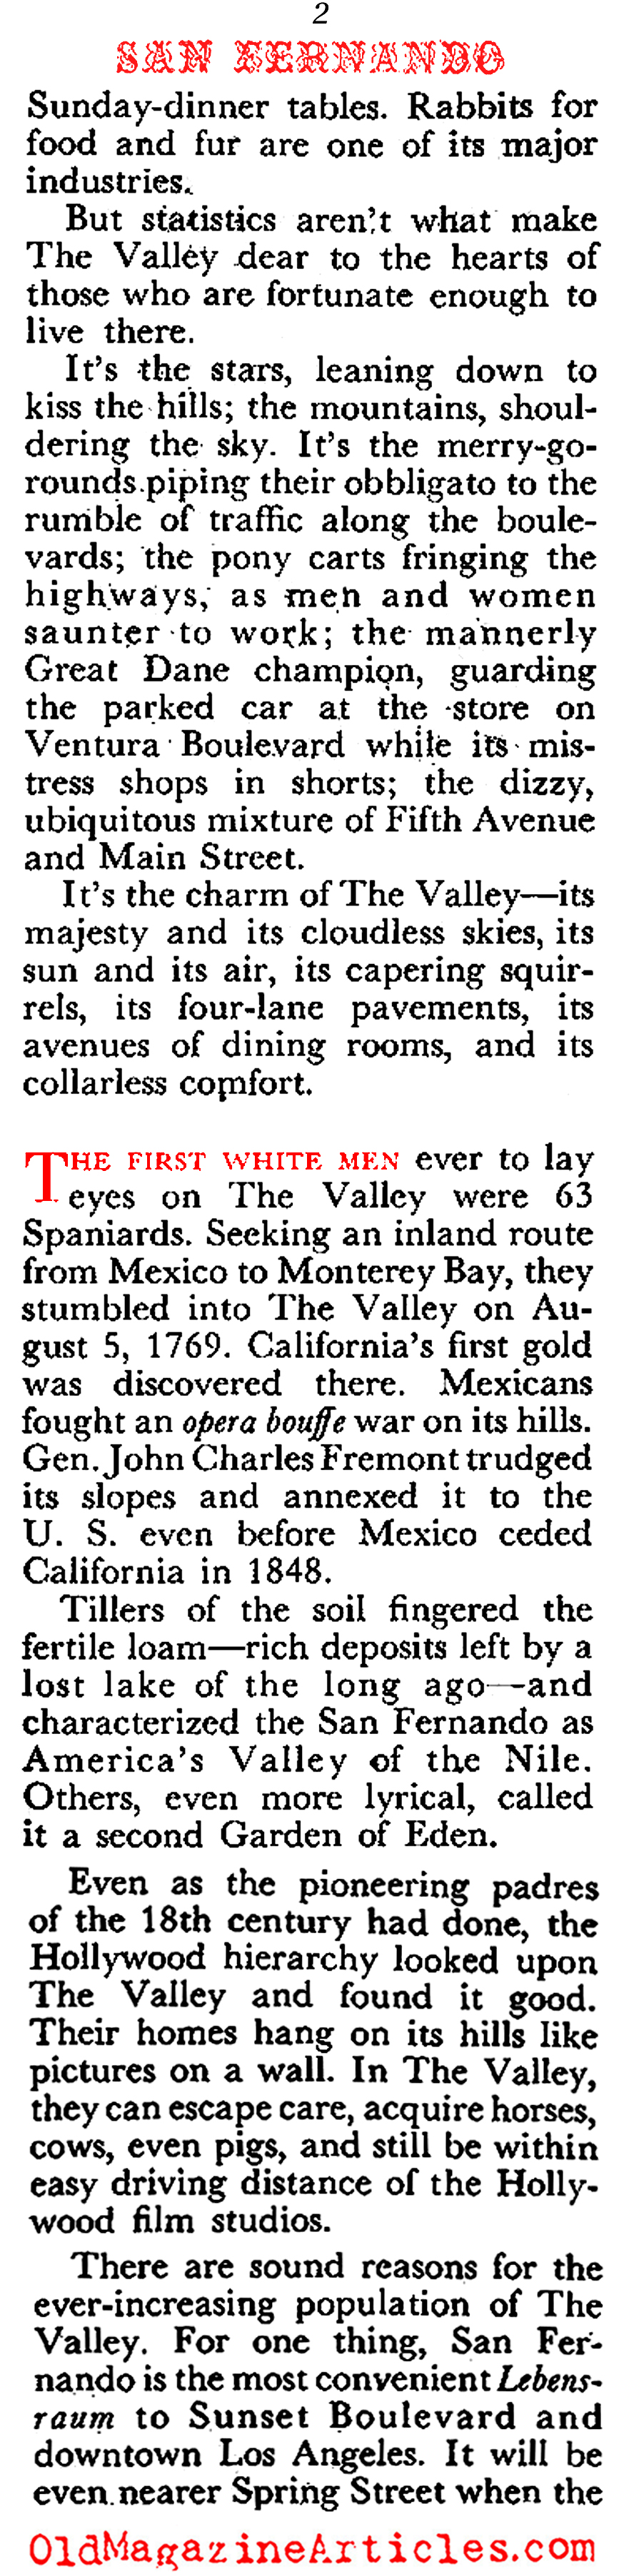 The San Fernando Valley (Coronet Magazine, 1951)